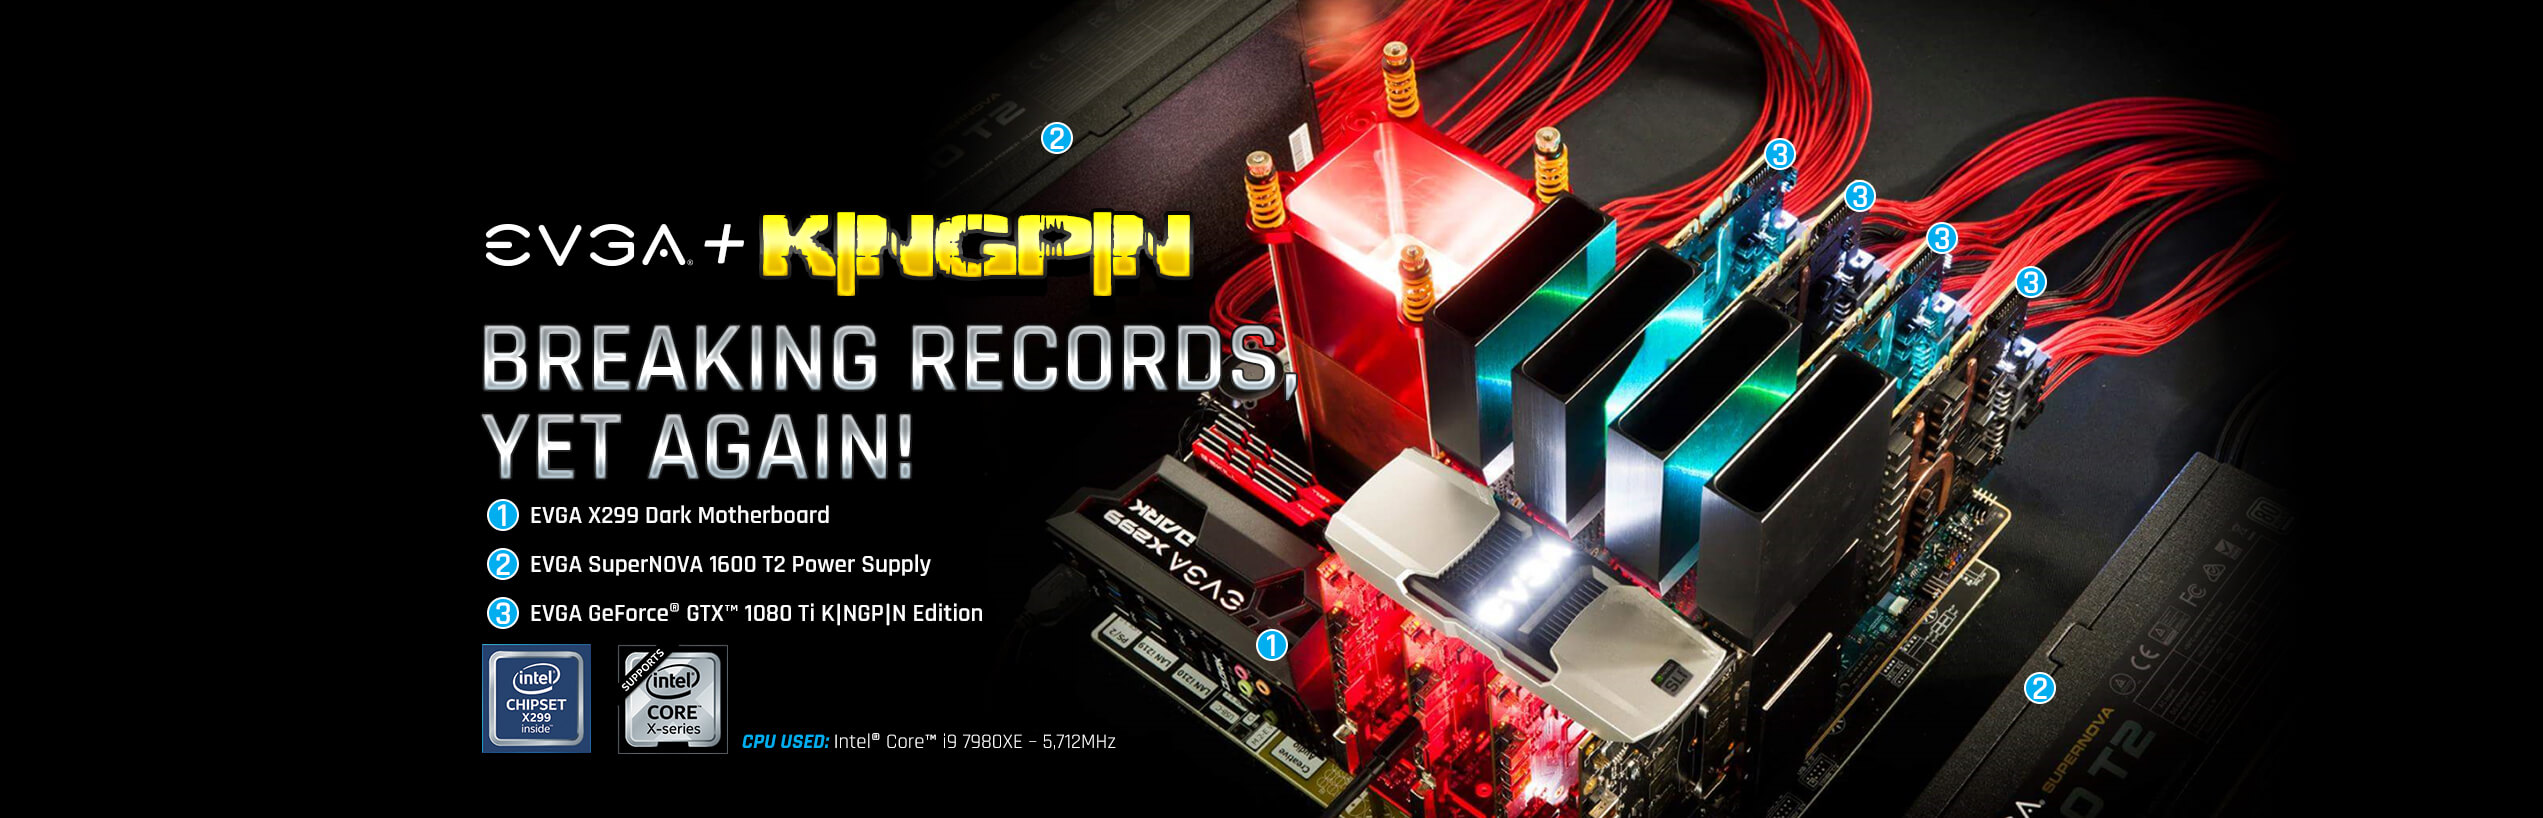 EVGA Hardware Breaks New World Records